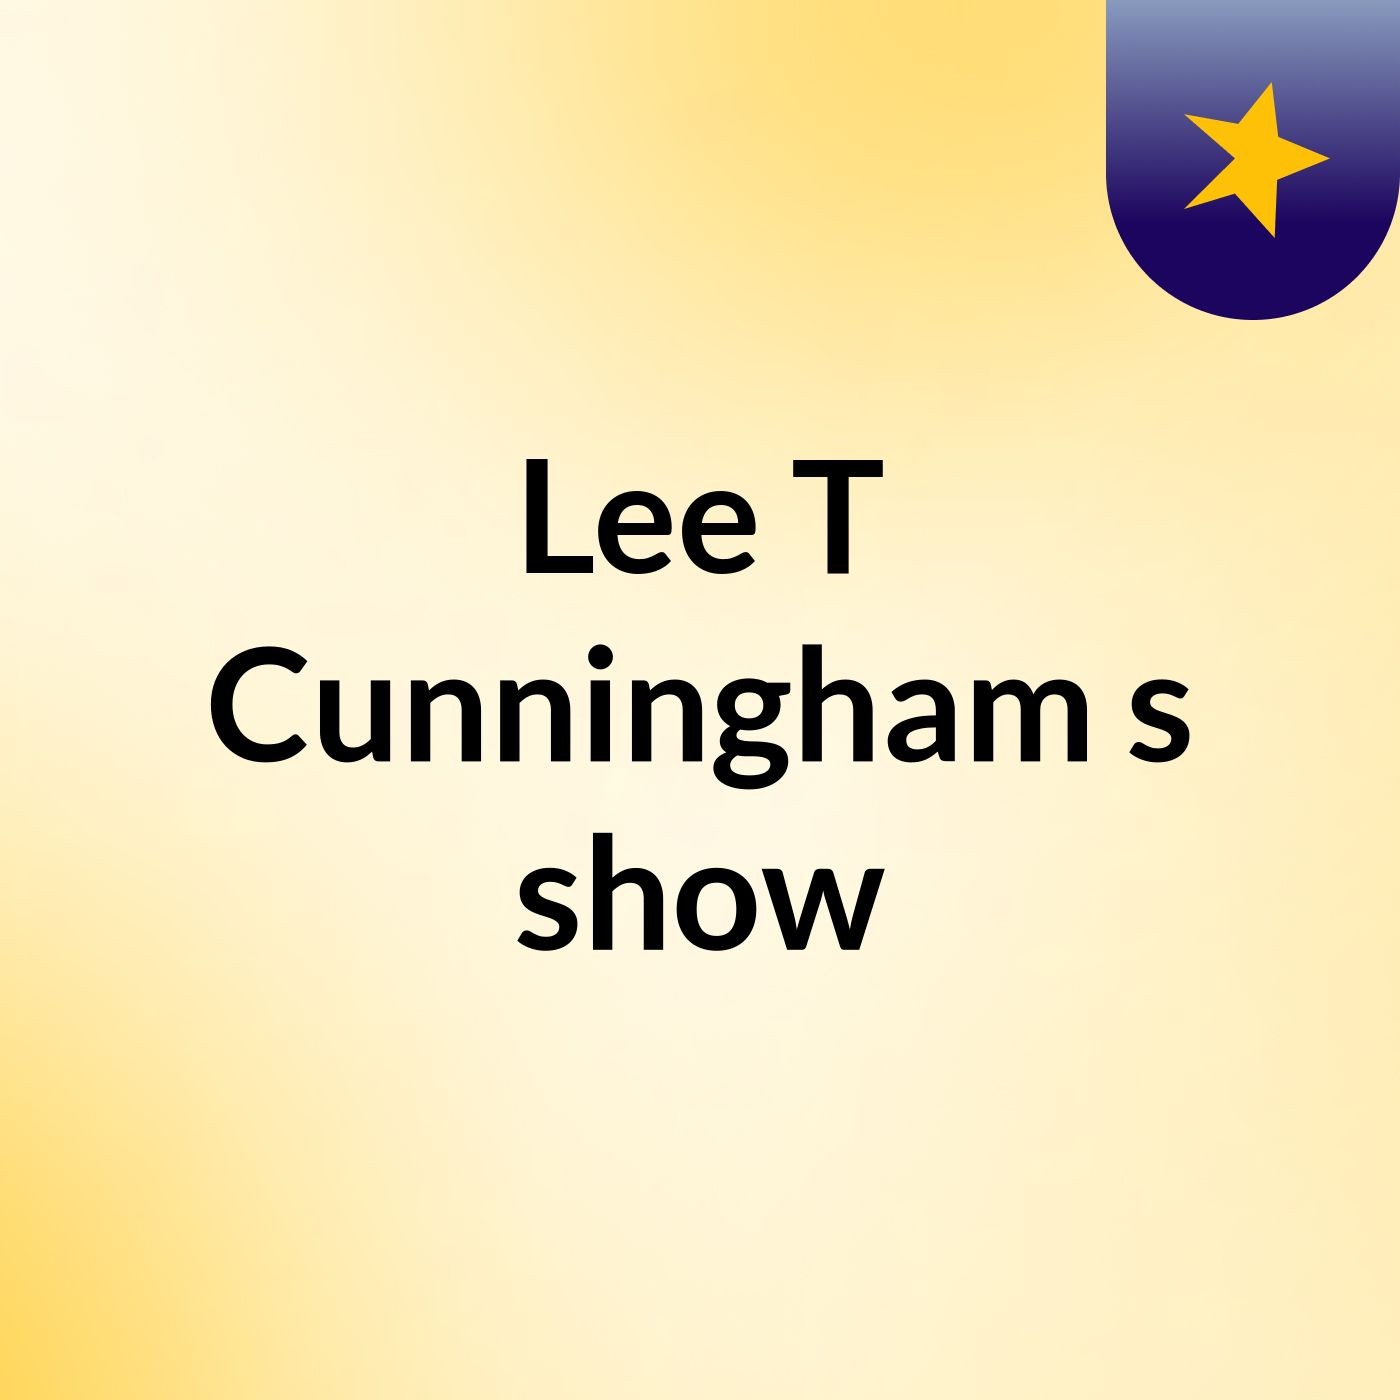 Lee T Cunningham's show